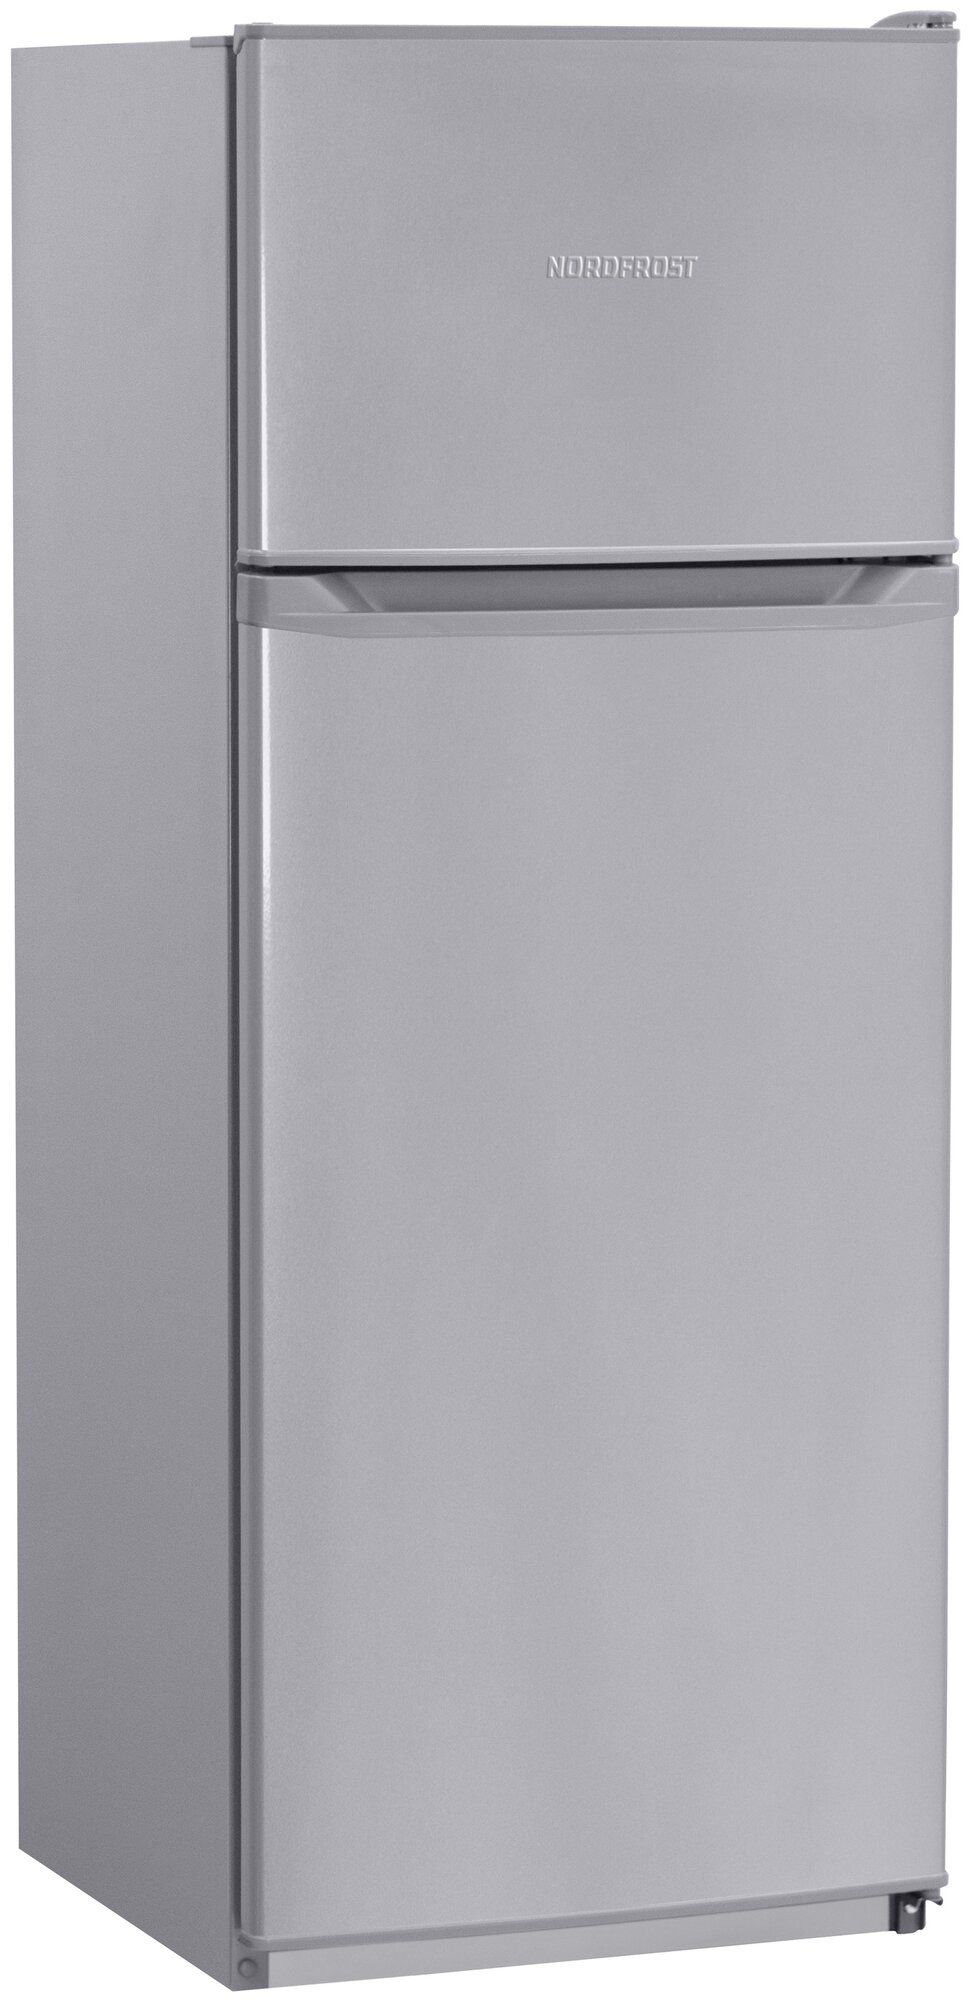 Двухкамерный холодильник NordFrost NRT 141 332 серебристый металлик - фотография № 1